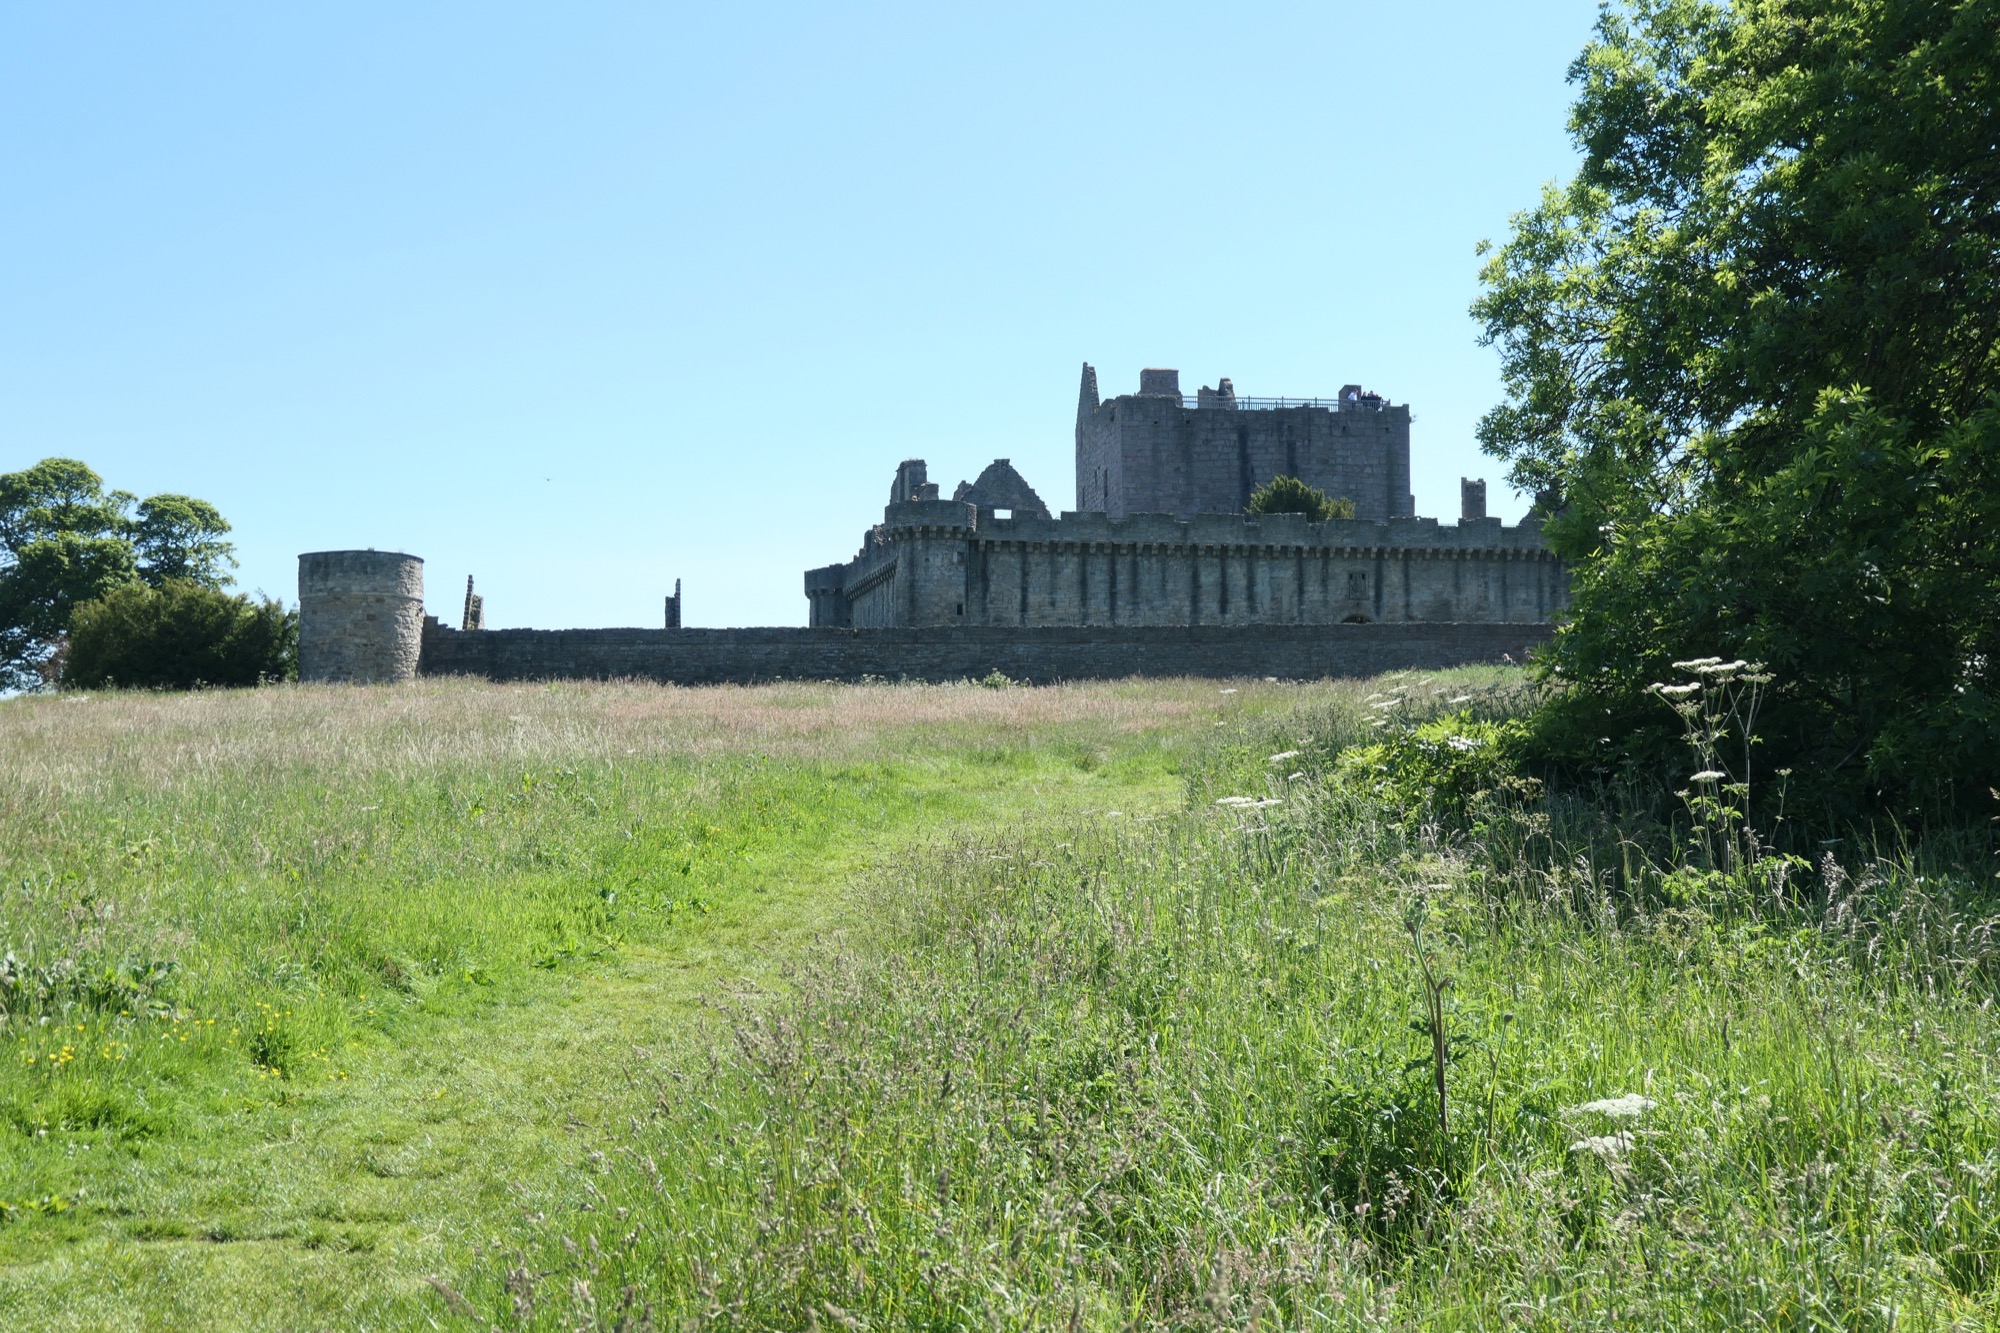 Approaching Craigmillar Castle